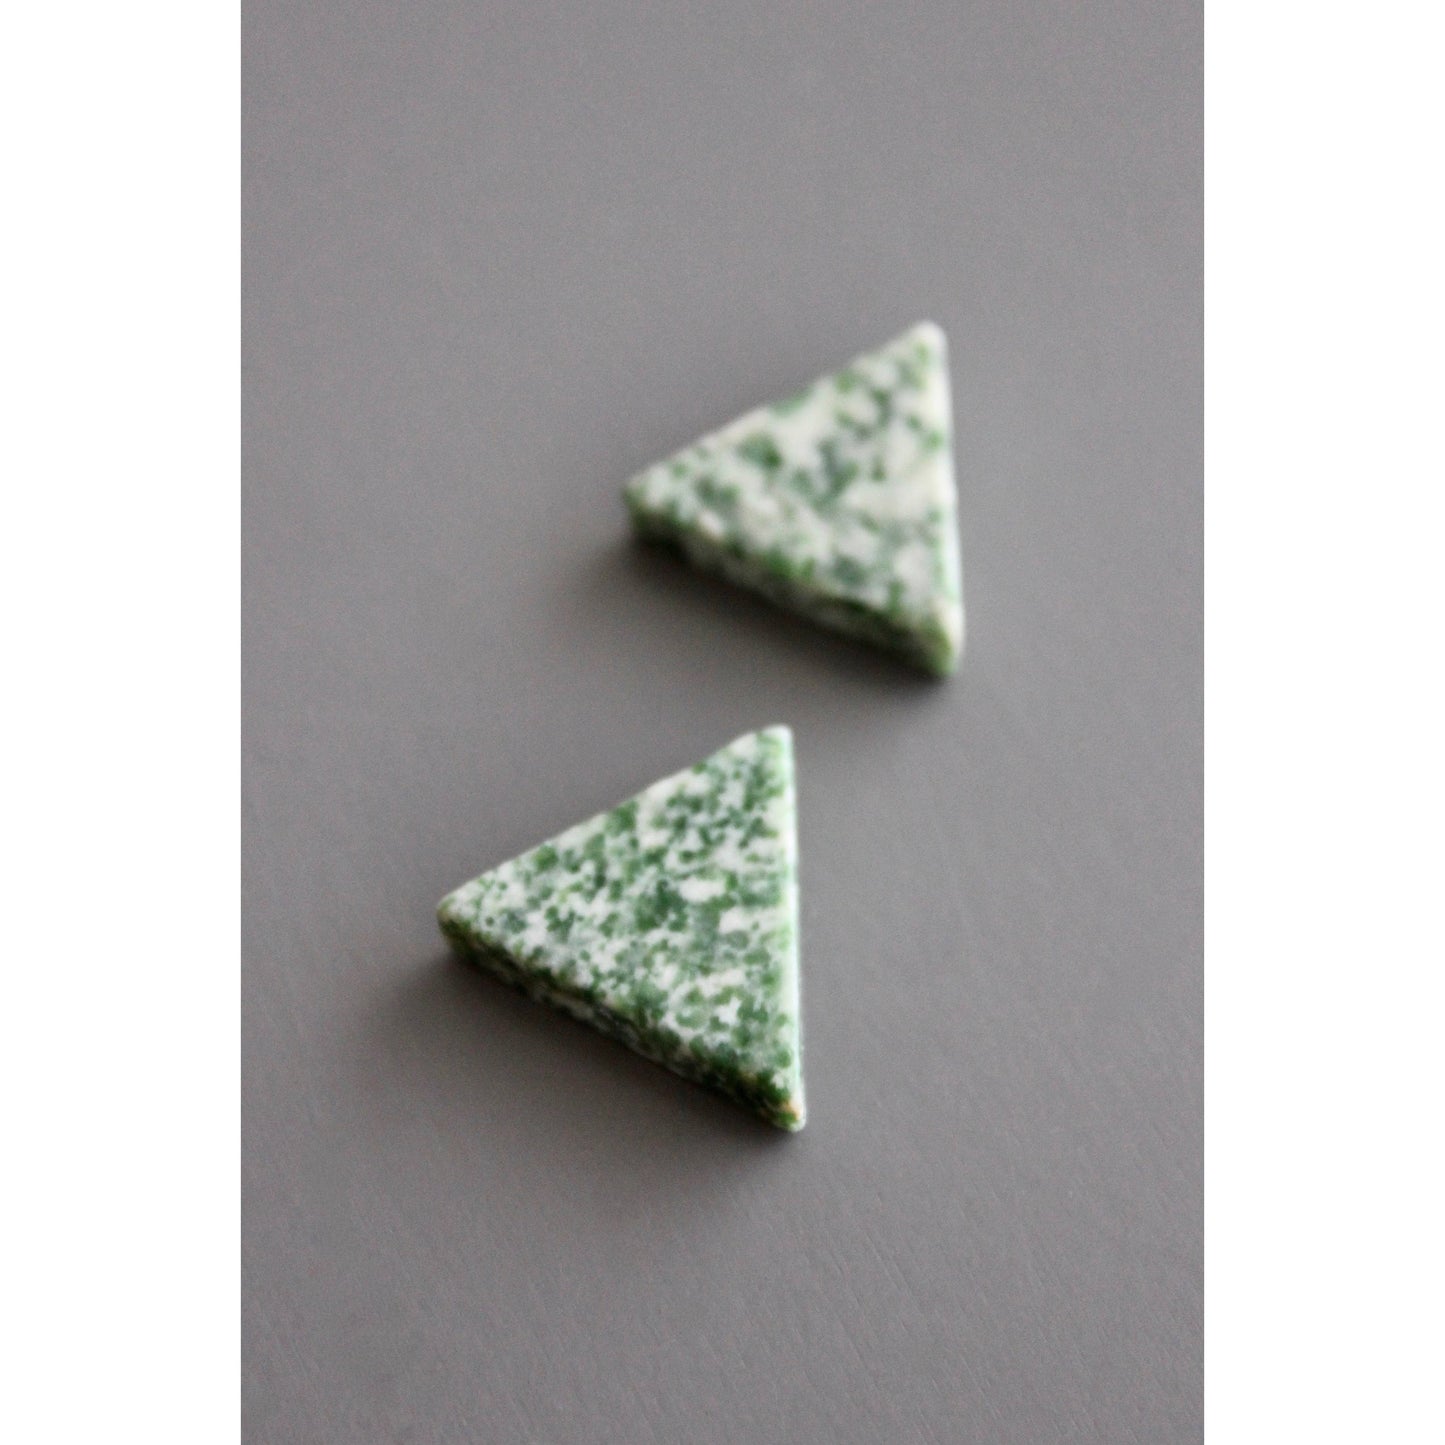 David Aubrey Jewelry - Green Spotted Stone Post Earrings